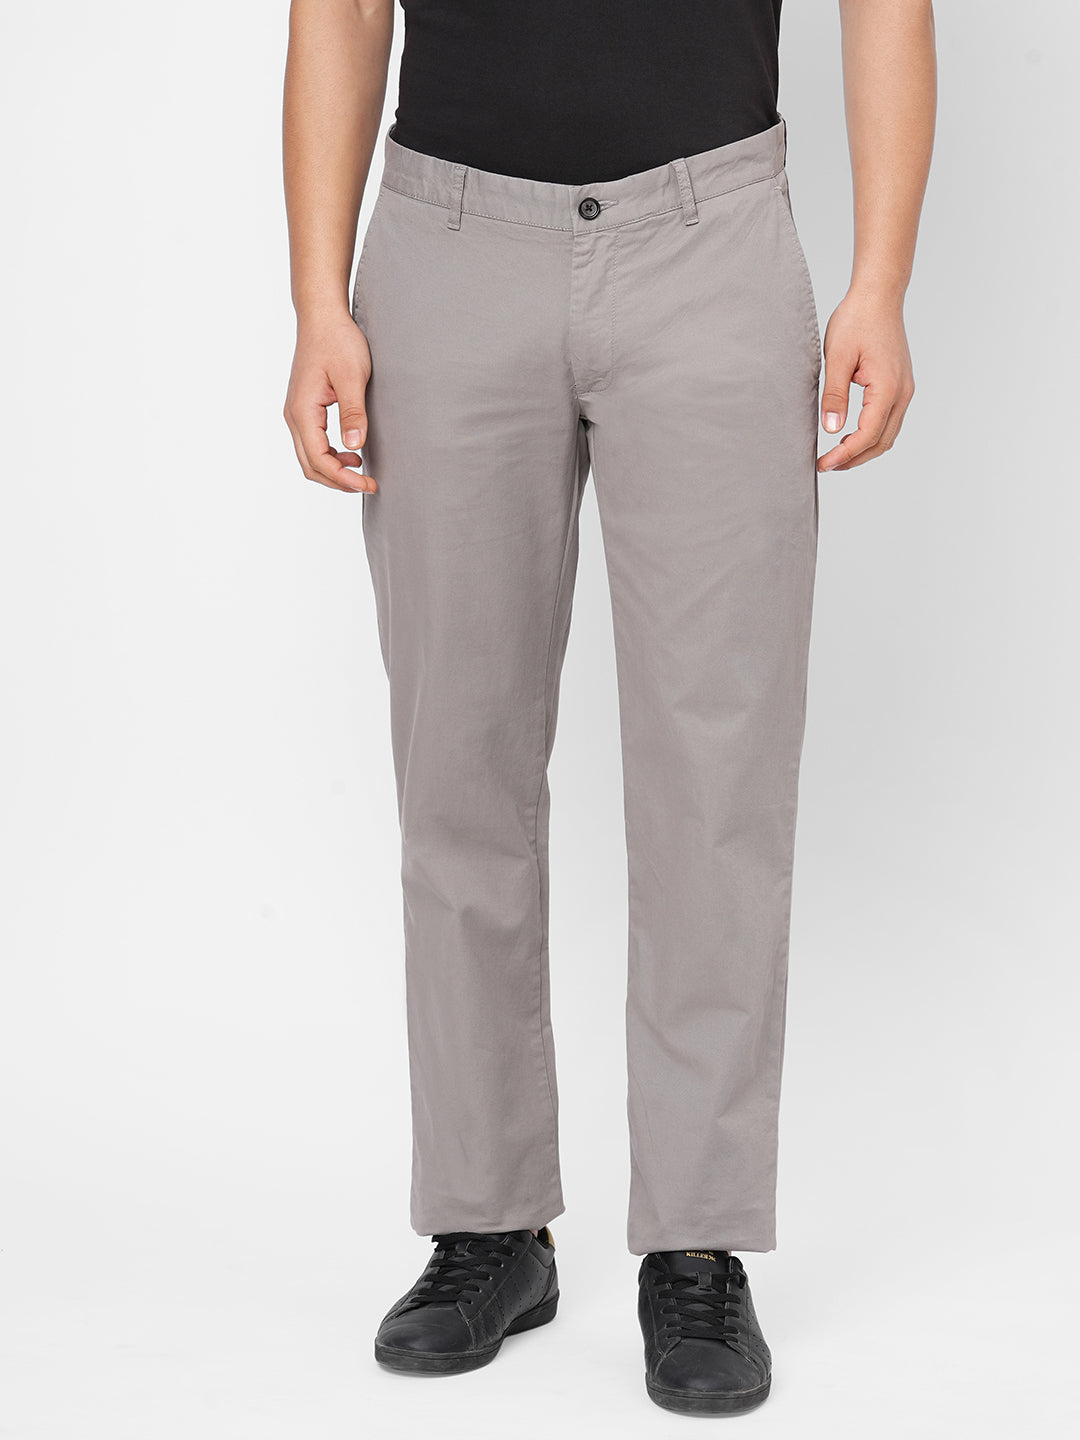 Men's Cotton Lycra Grey Regular Fit Pant